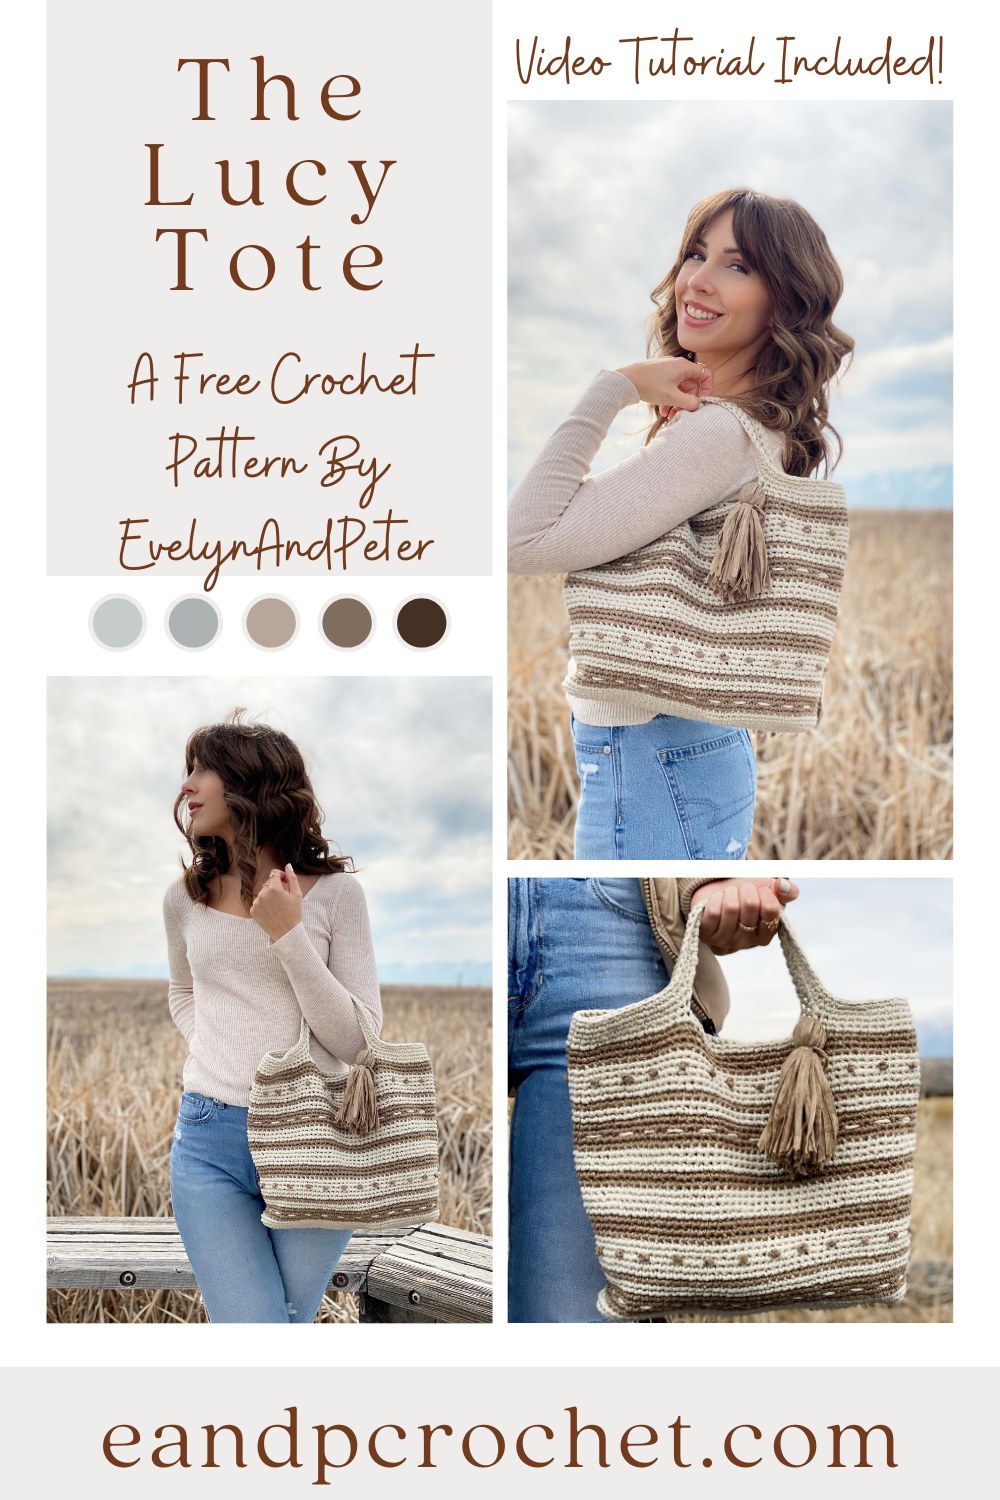 Eyelet Crochet Bag Pattern | Knitting with Chopsticks